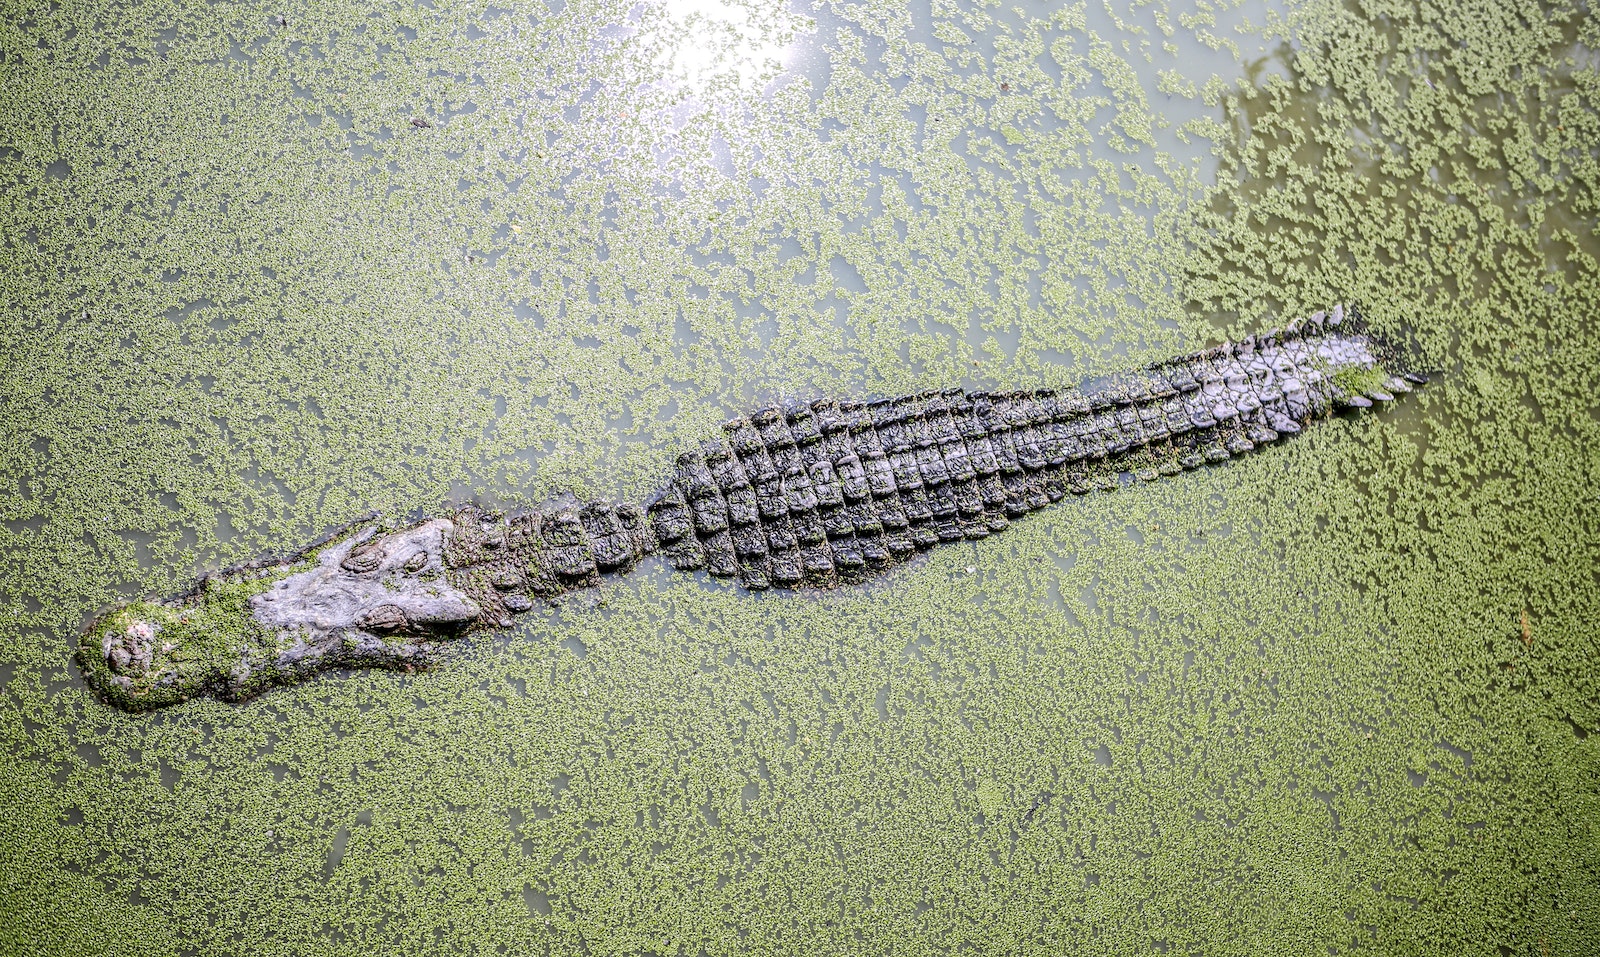 Understanding the Difference Between American Alligators and Crocodiles